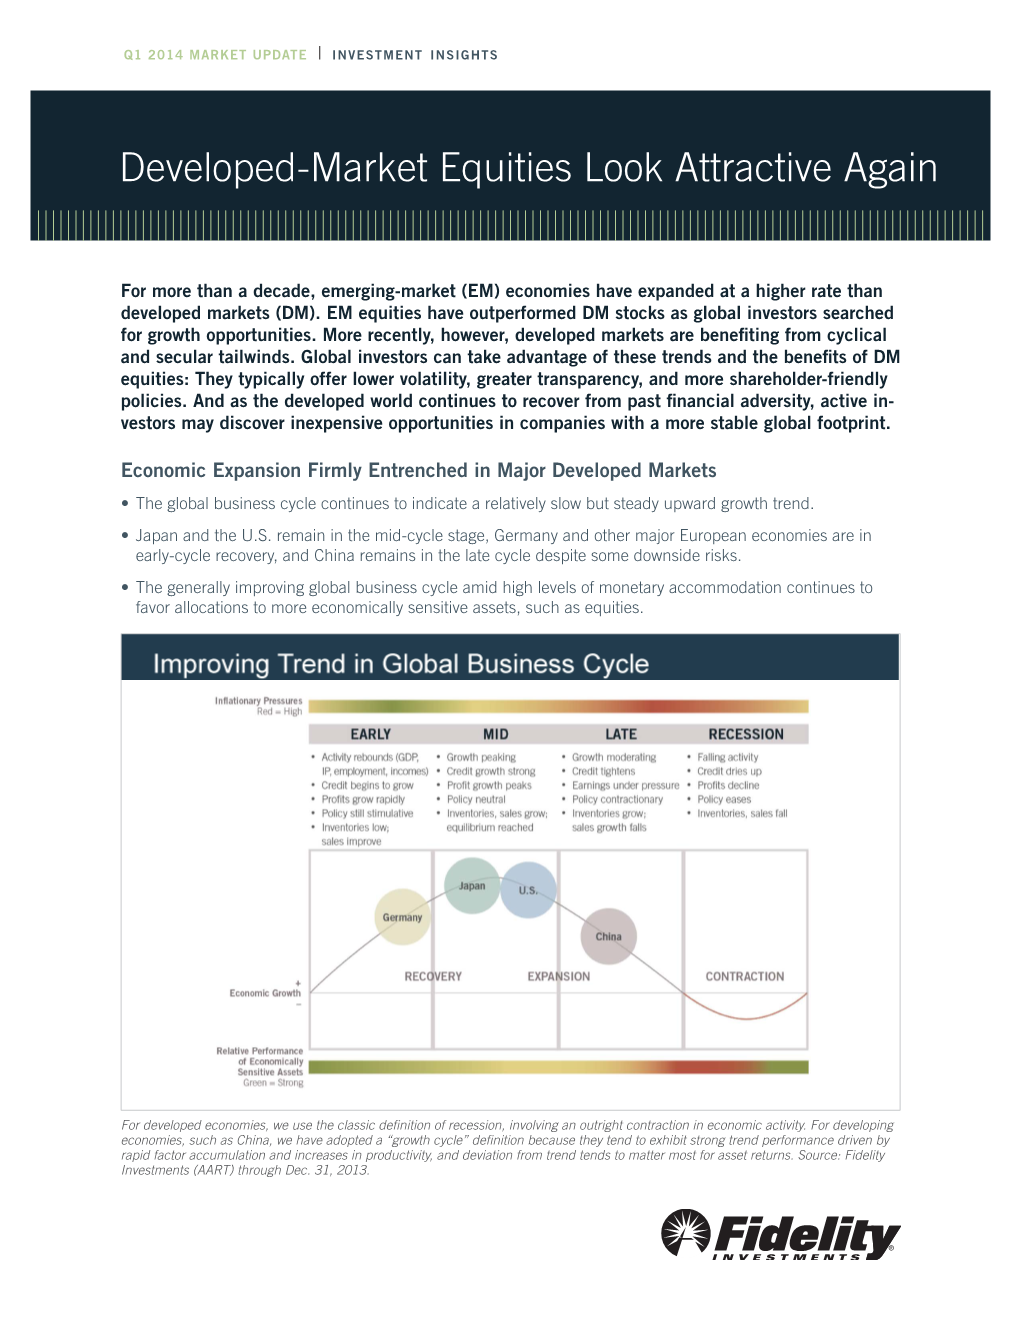 Developed-Market Equities Look Attractive Again